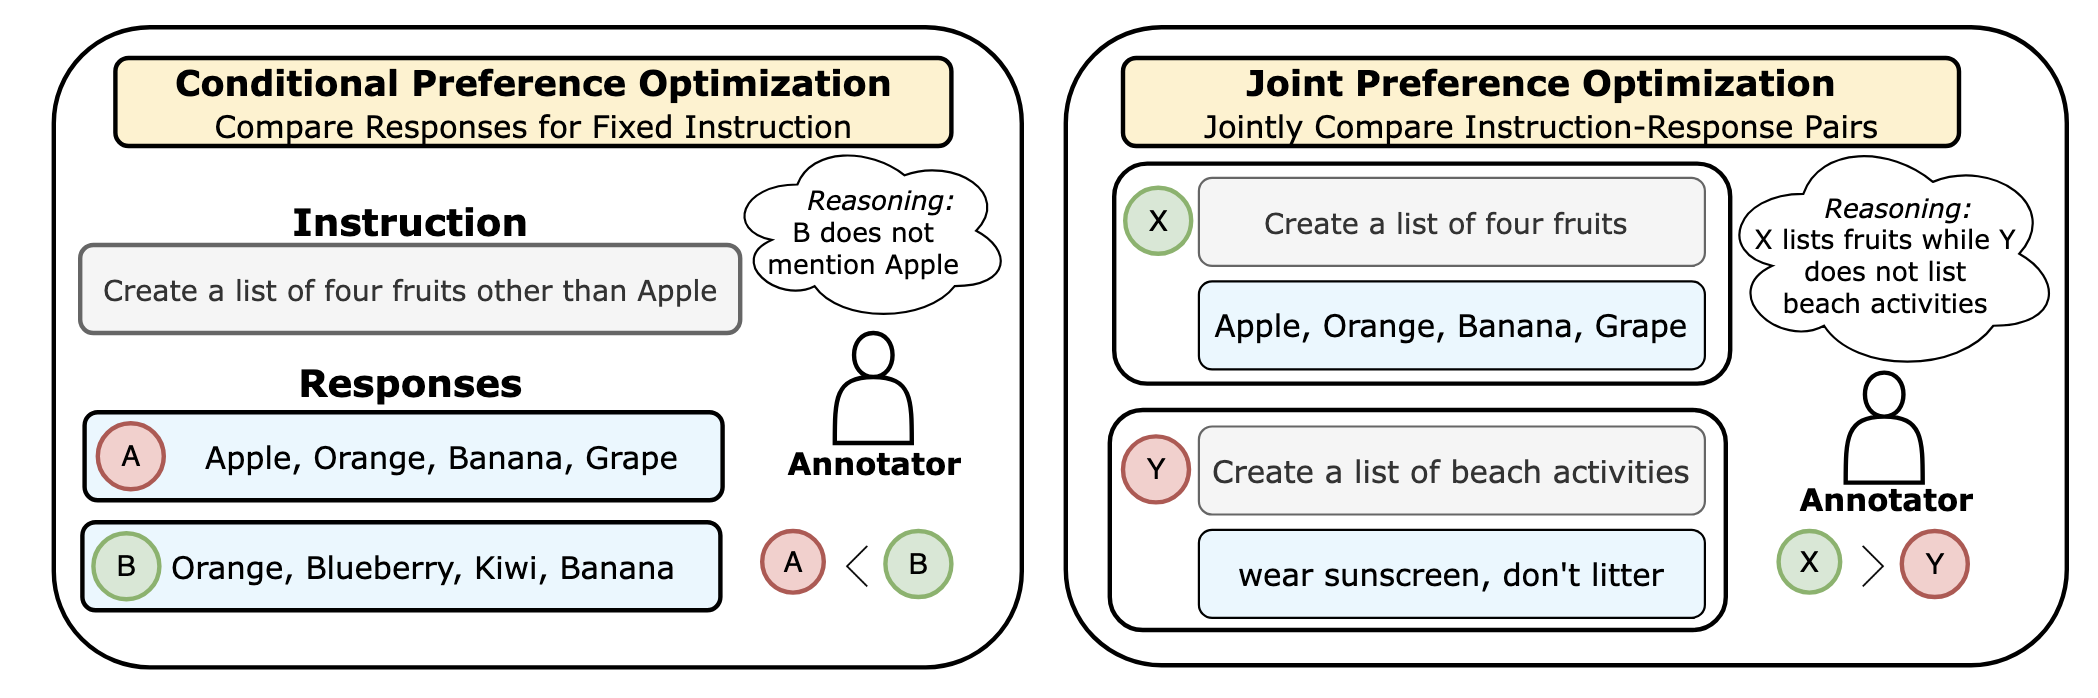 Joint Preference Optimization